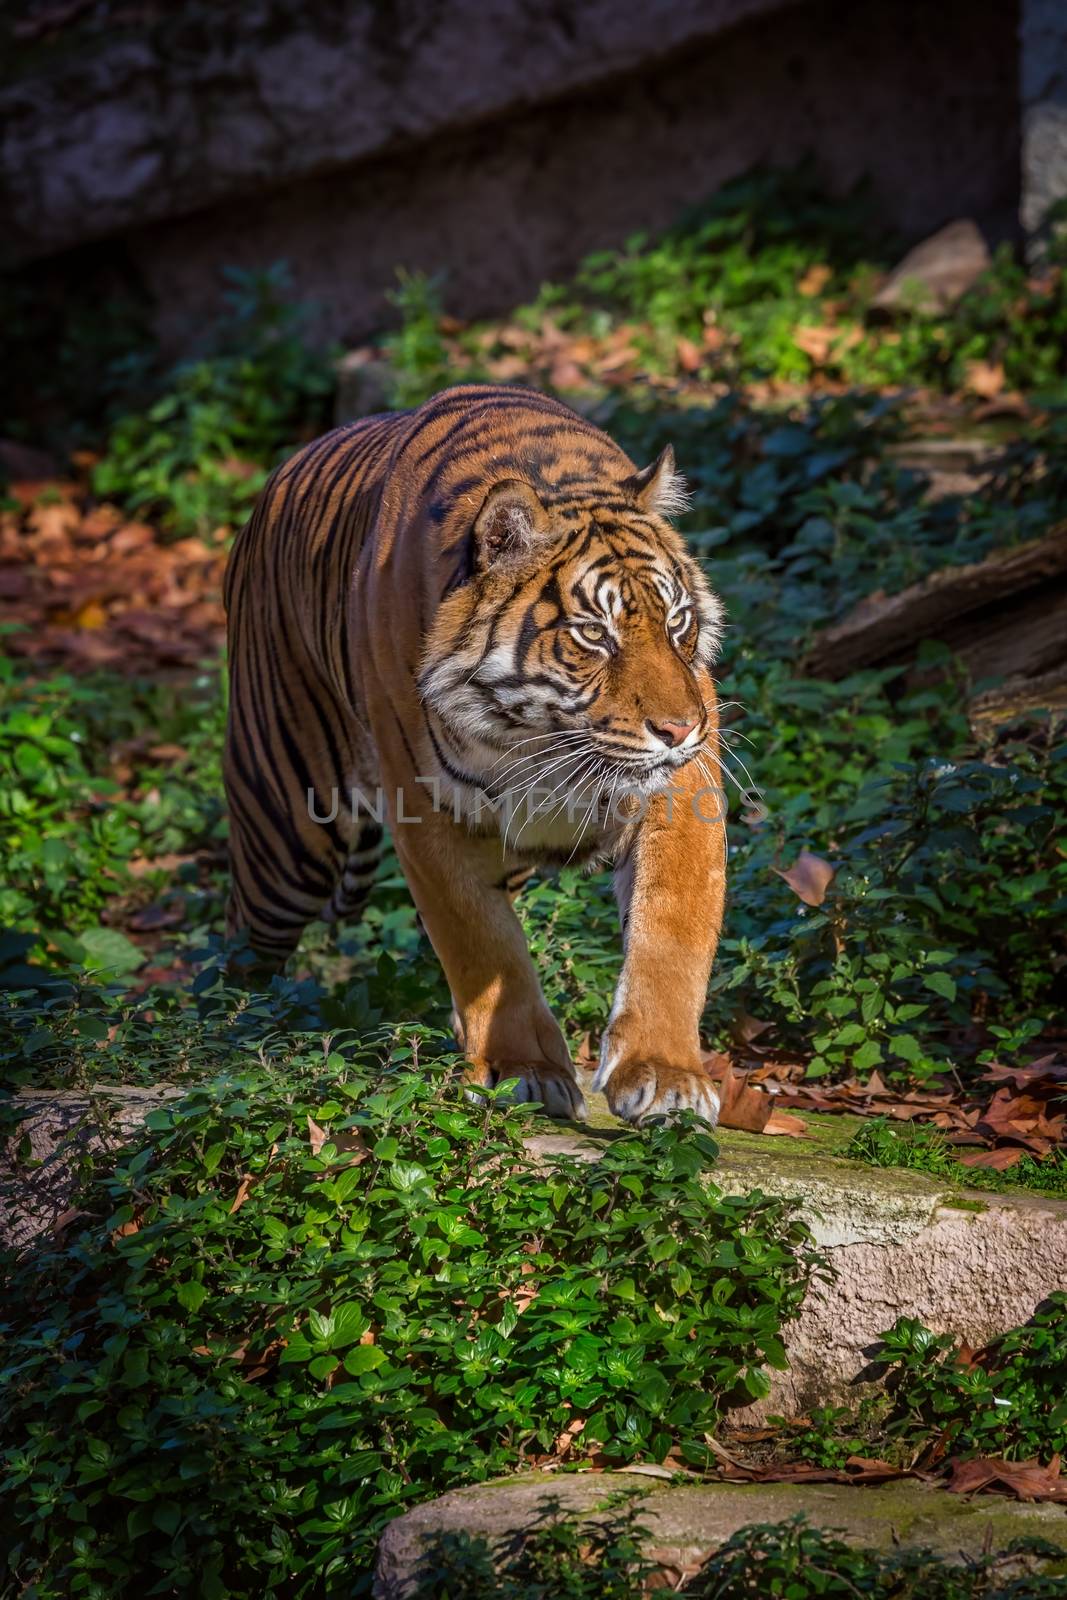 Asian tiger in Barcelona Zoo, Spain by Digoarpi